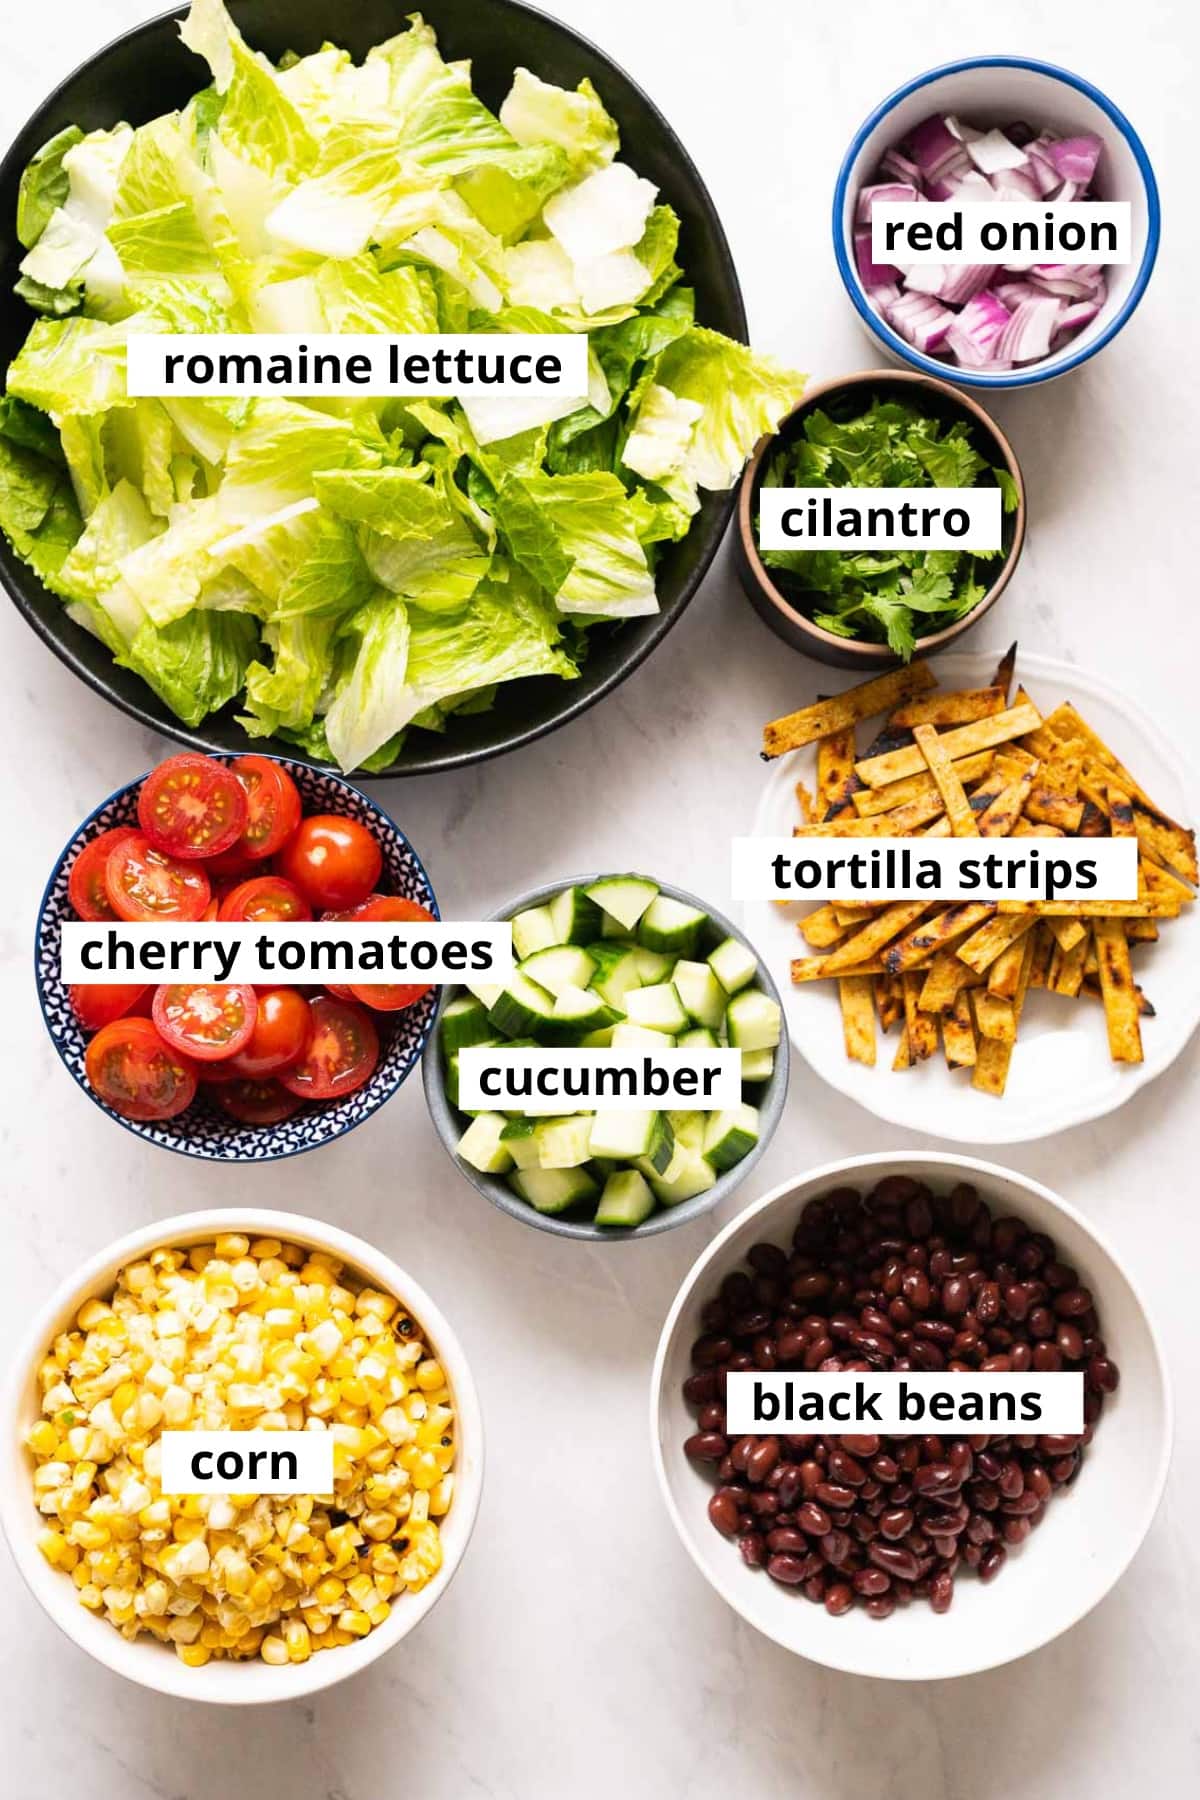 Romaine lettuce, cilantro, red onion, cherry tomatoes, cucumber, tortilla strips, black beans, corn.